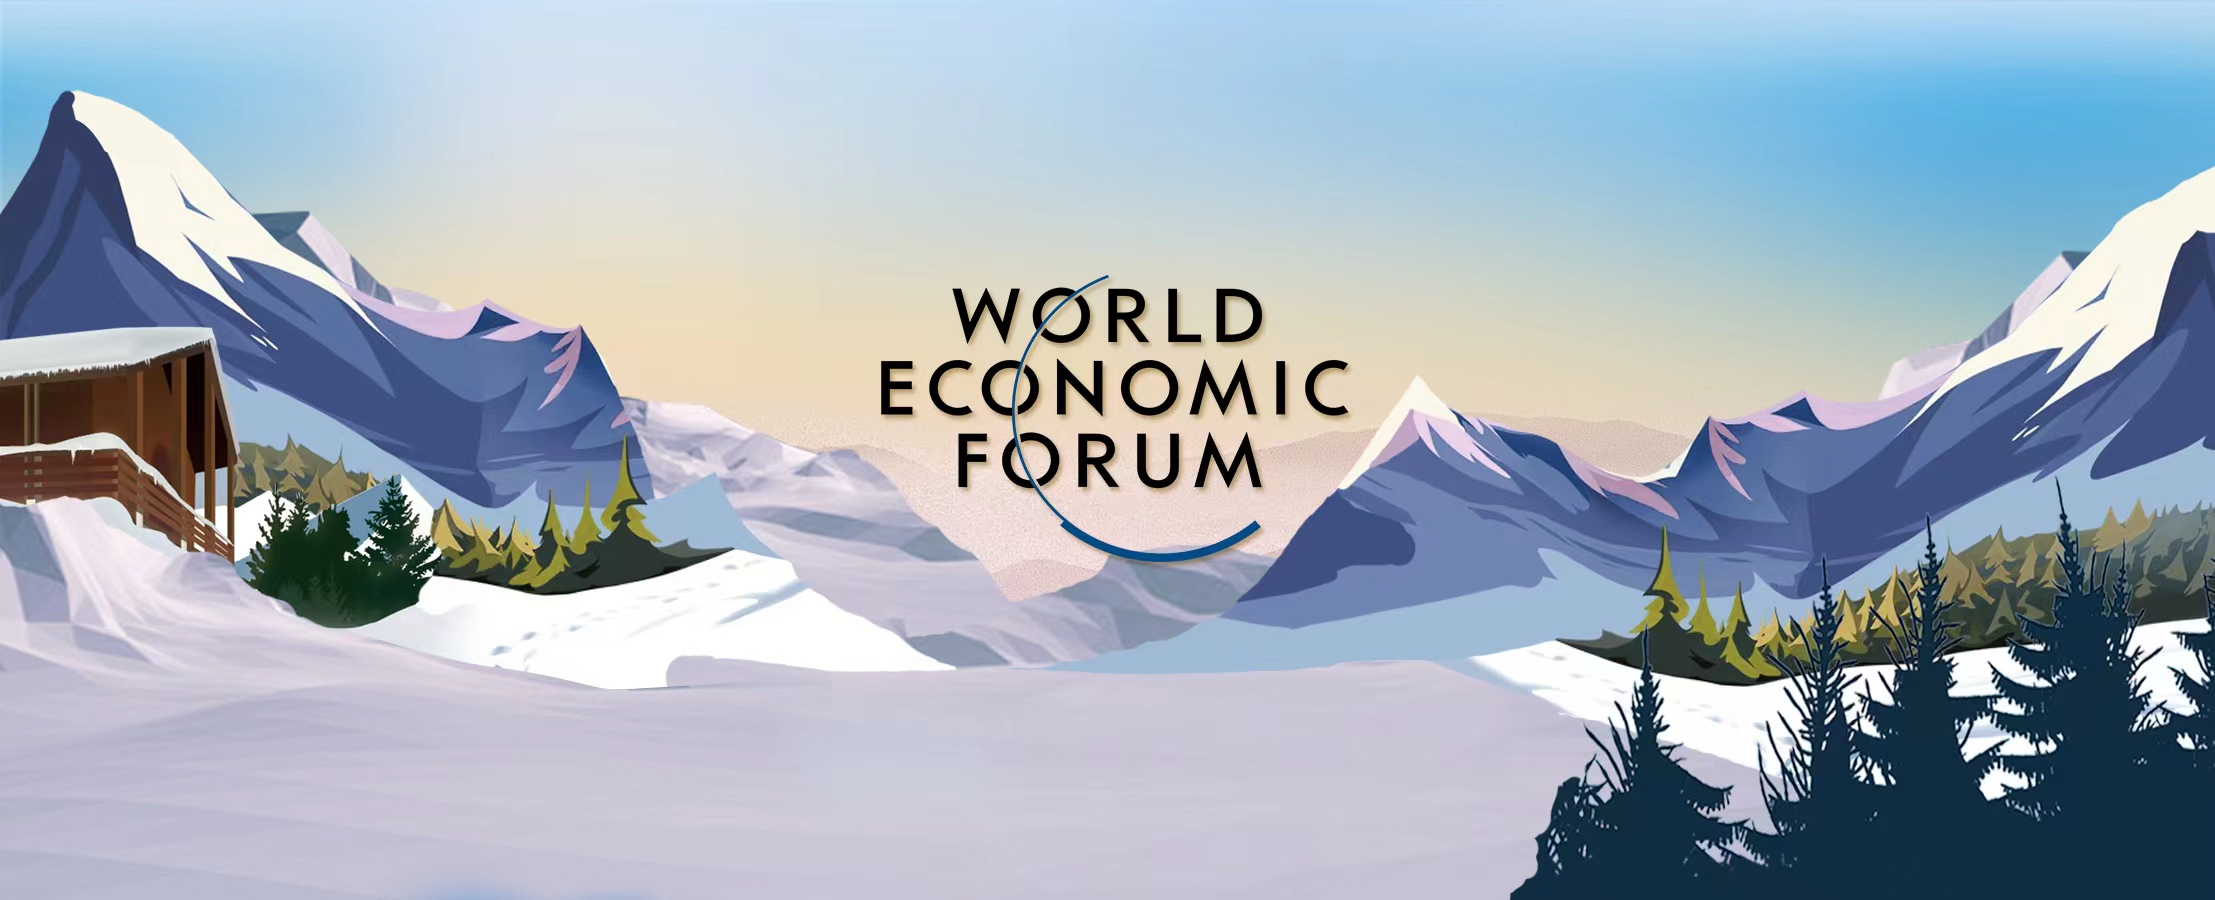 Report of world economic forum